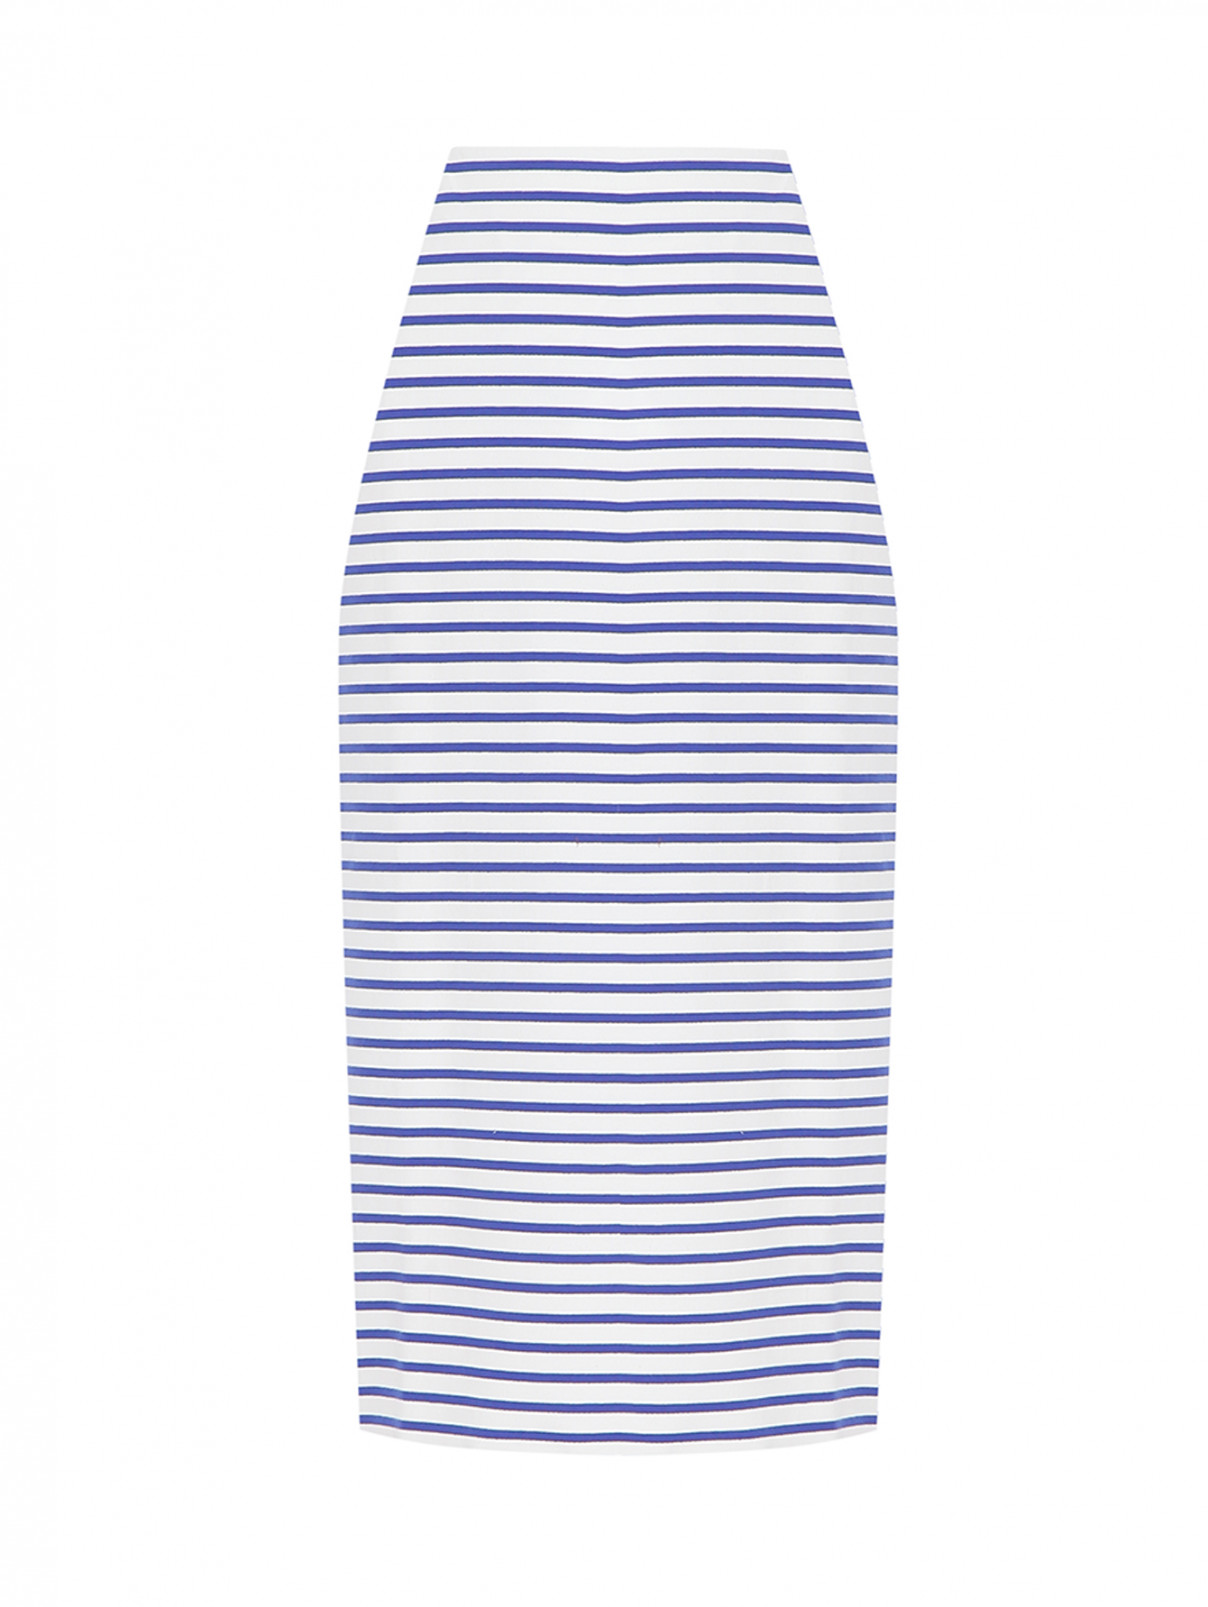 Трикотажная юбка с узором полоска Max&Co  –  Общий вид  – Цвет:  Синий